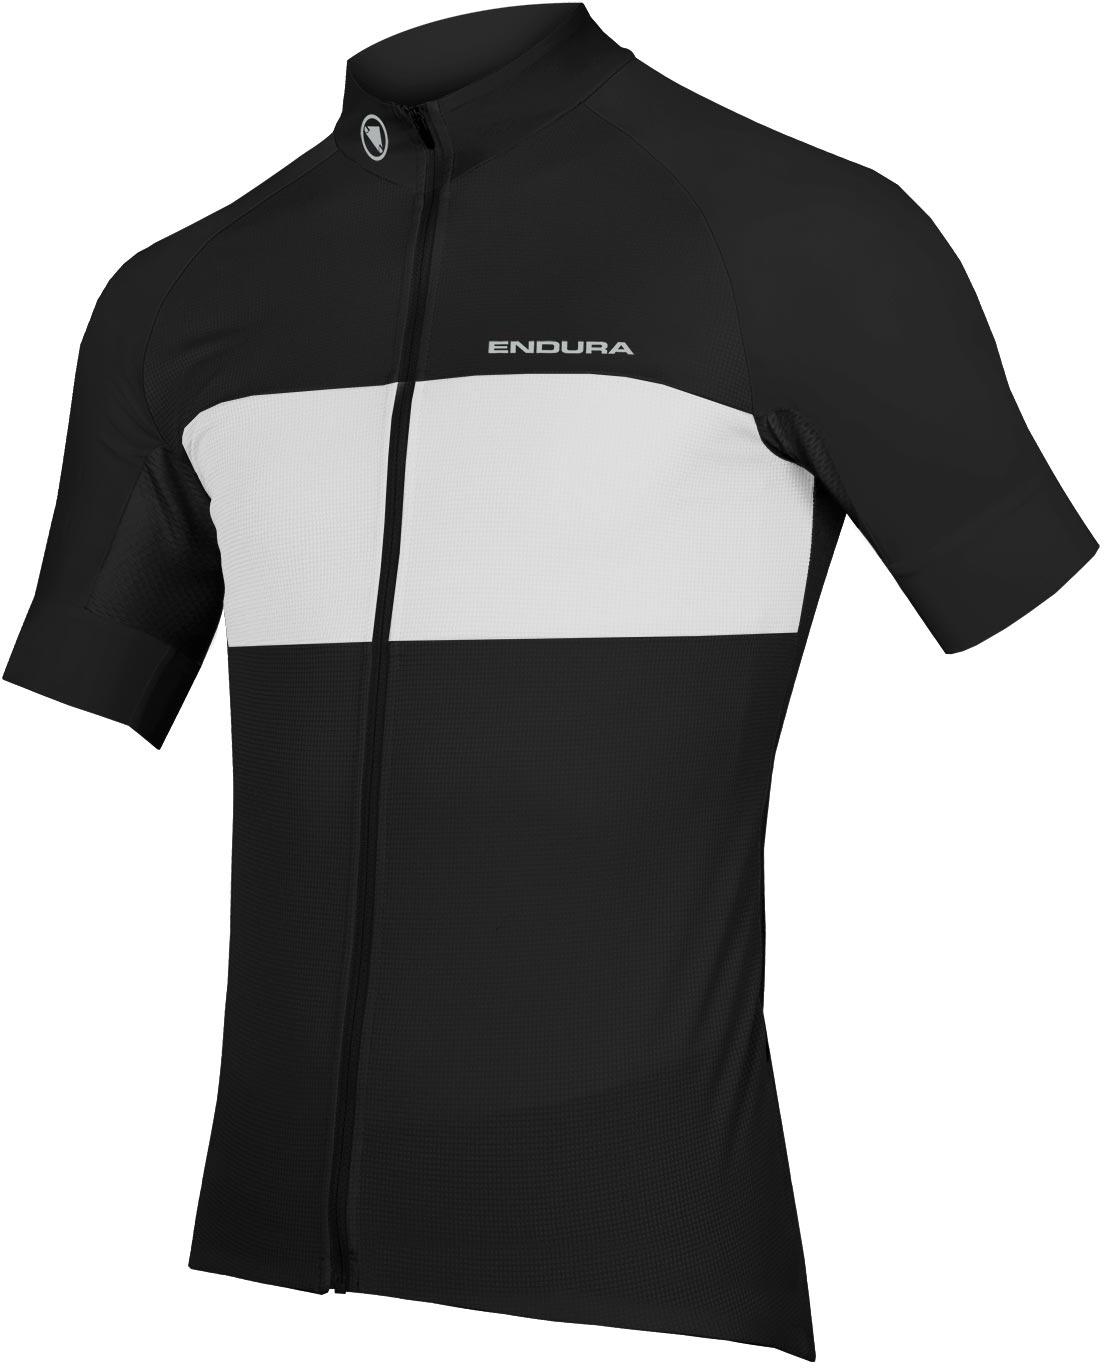 Endura Fs260-pro Short Sleeve Cycling Jersey Ii  Black